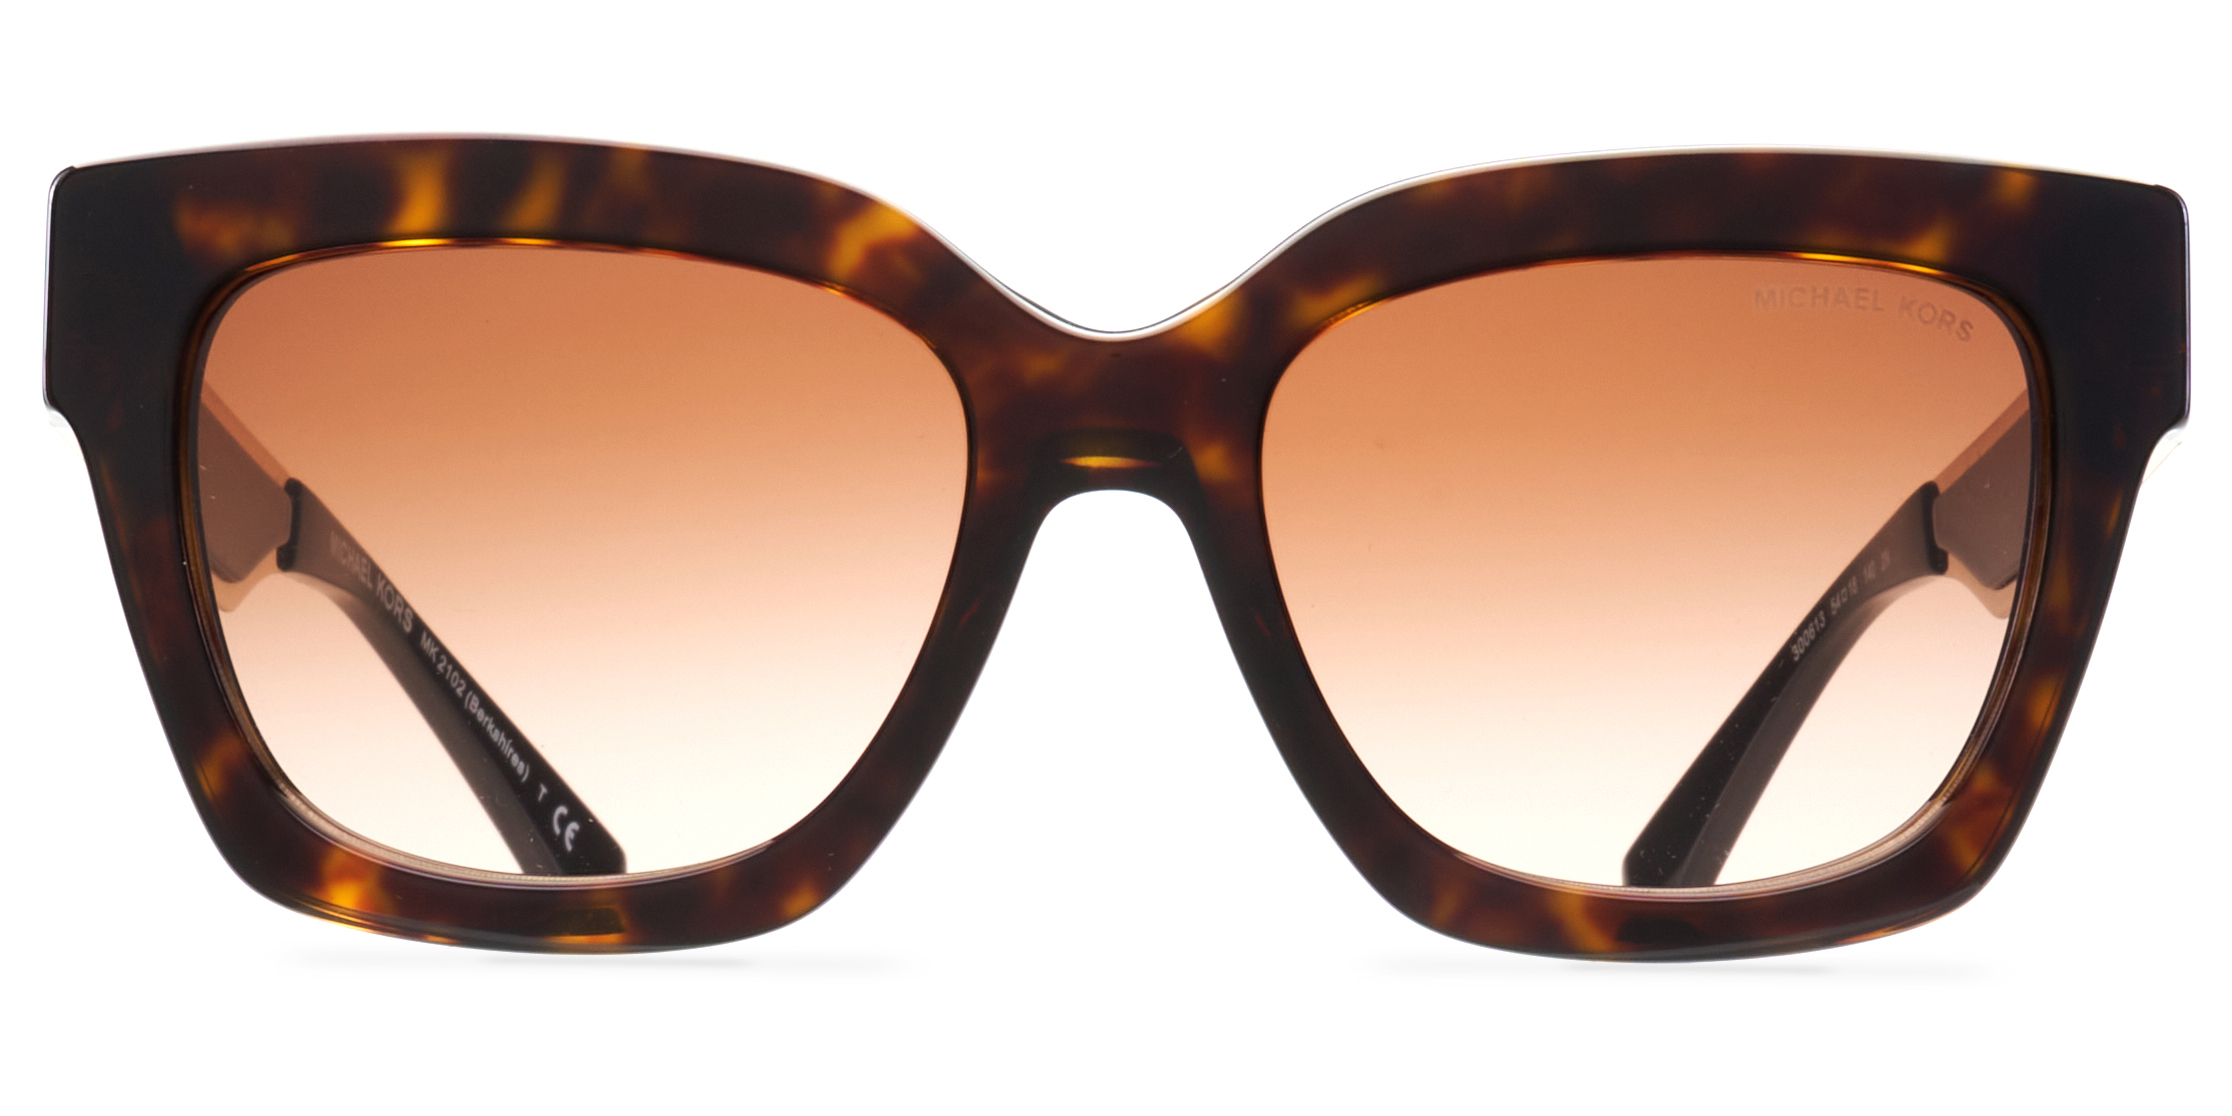 Michael Kors Sunglasses MK2102 300613 54